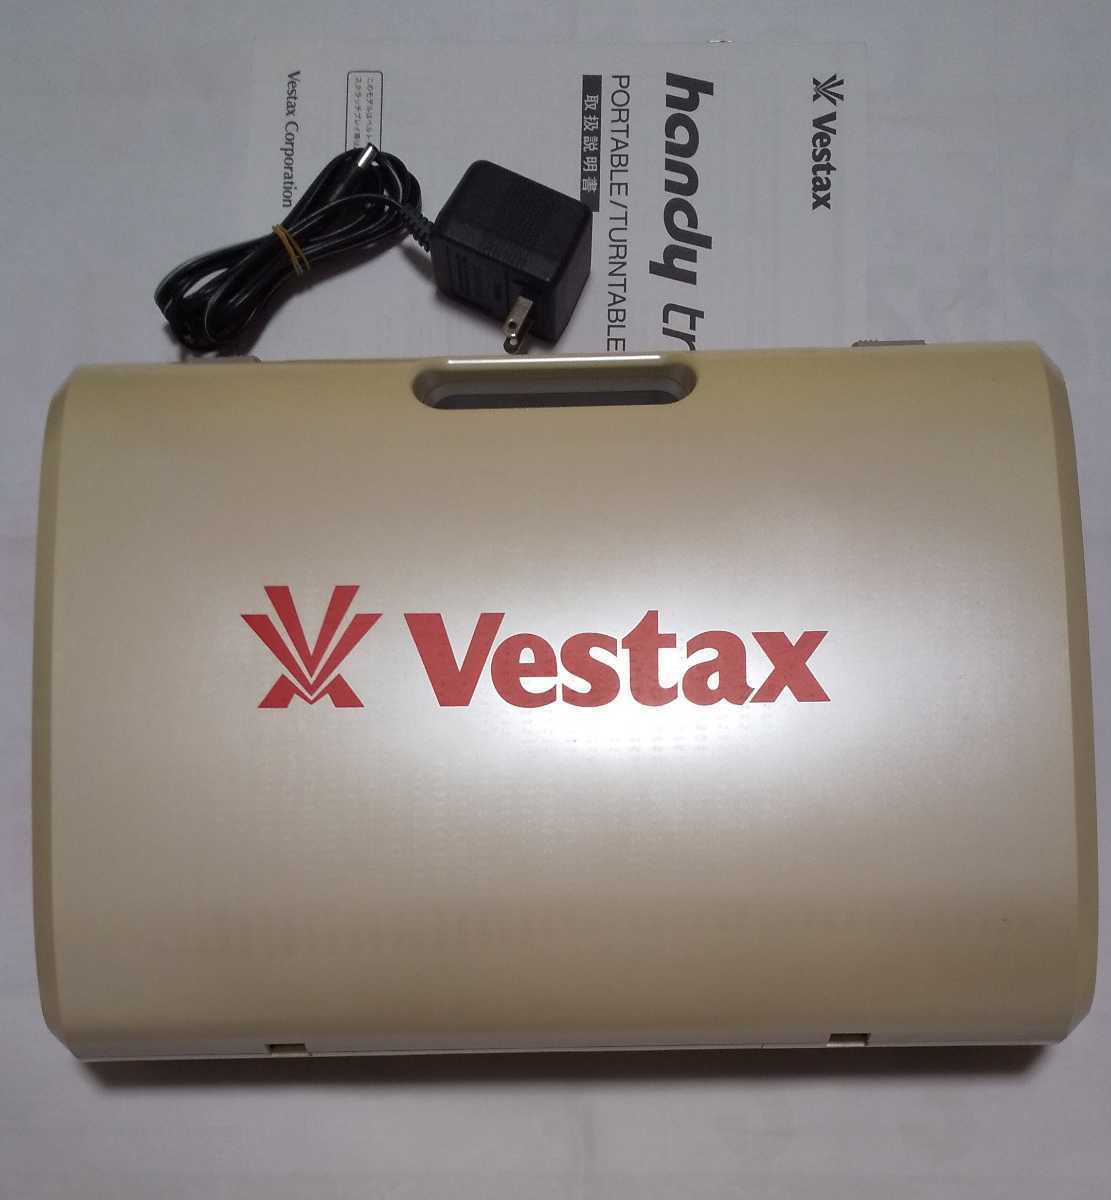 Vestax Handy Trax 動作正常 説明書付き ベスタクス レコードプレーヤー - cna.gob.bo